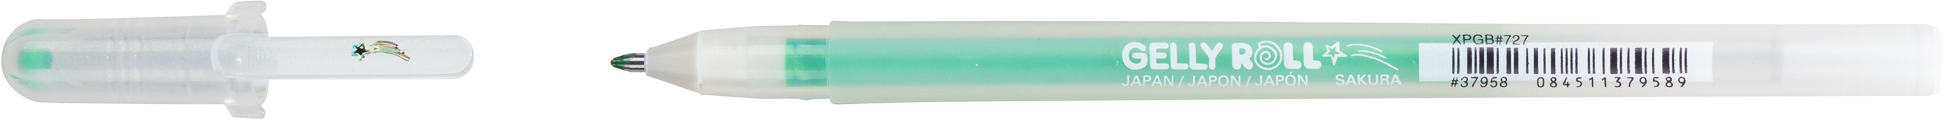 SAKURA Gelly Roll 0.5mm XPGB727 Stardust limone Glitter